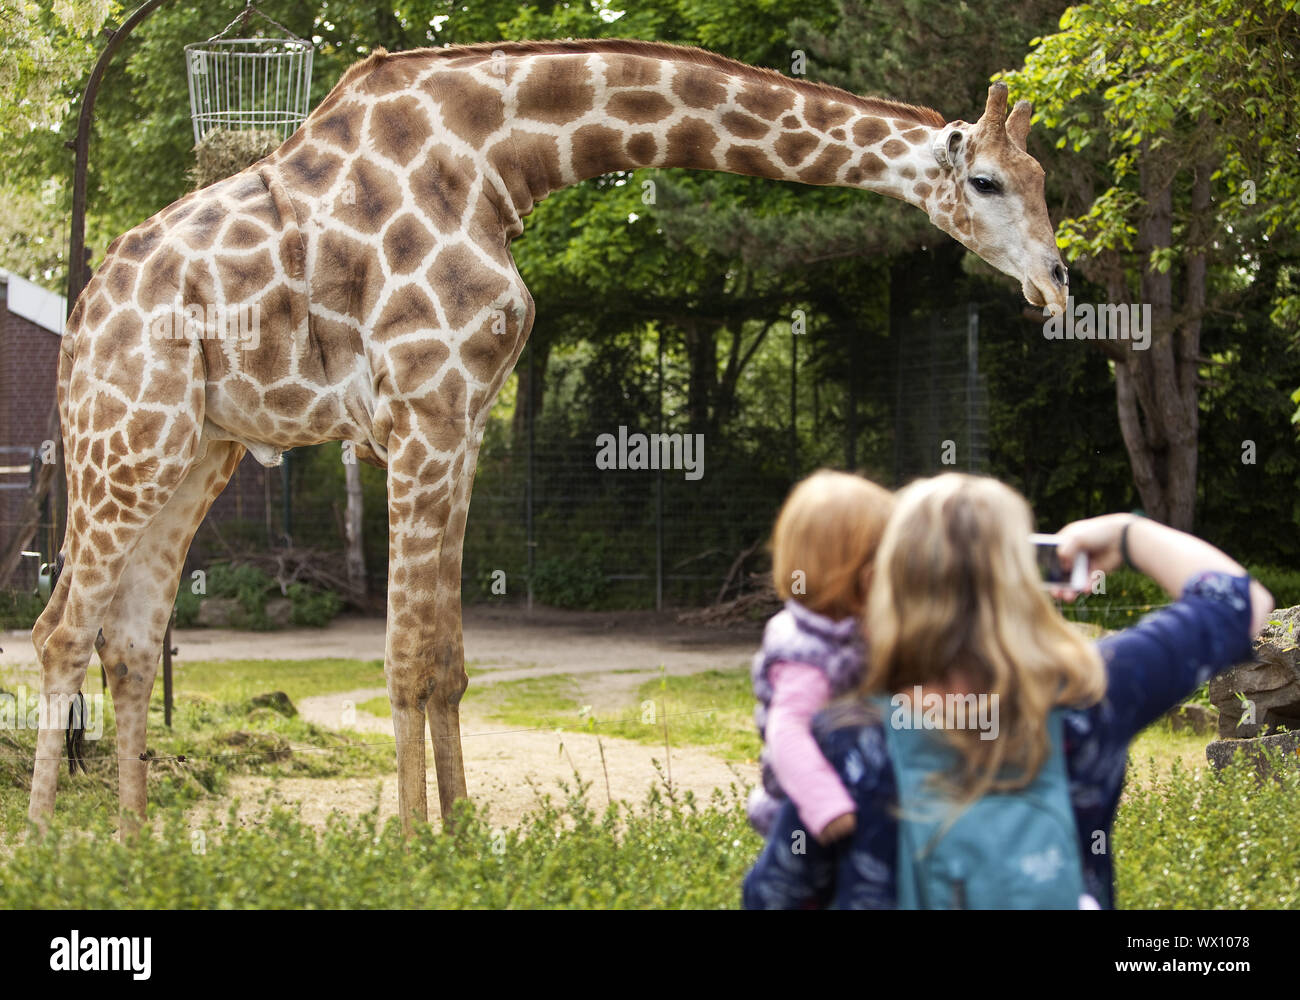 Angolan giraffe (Giraffa) mother with daughter taking fotos of the giraffe in a zoo, Dortmund Europe Stock Photo